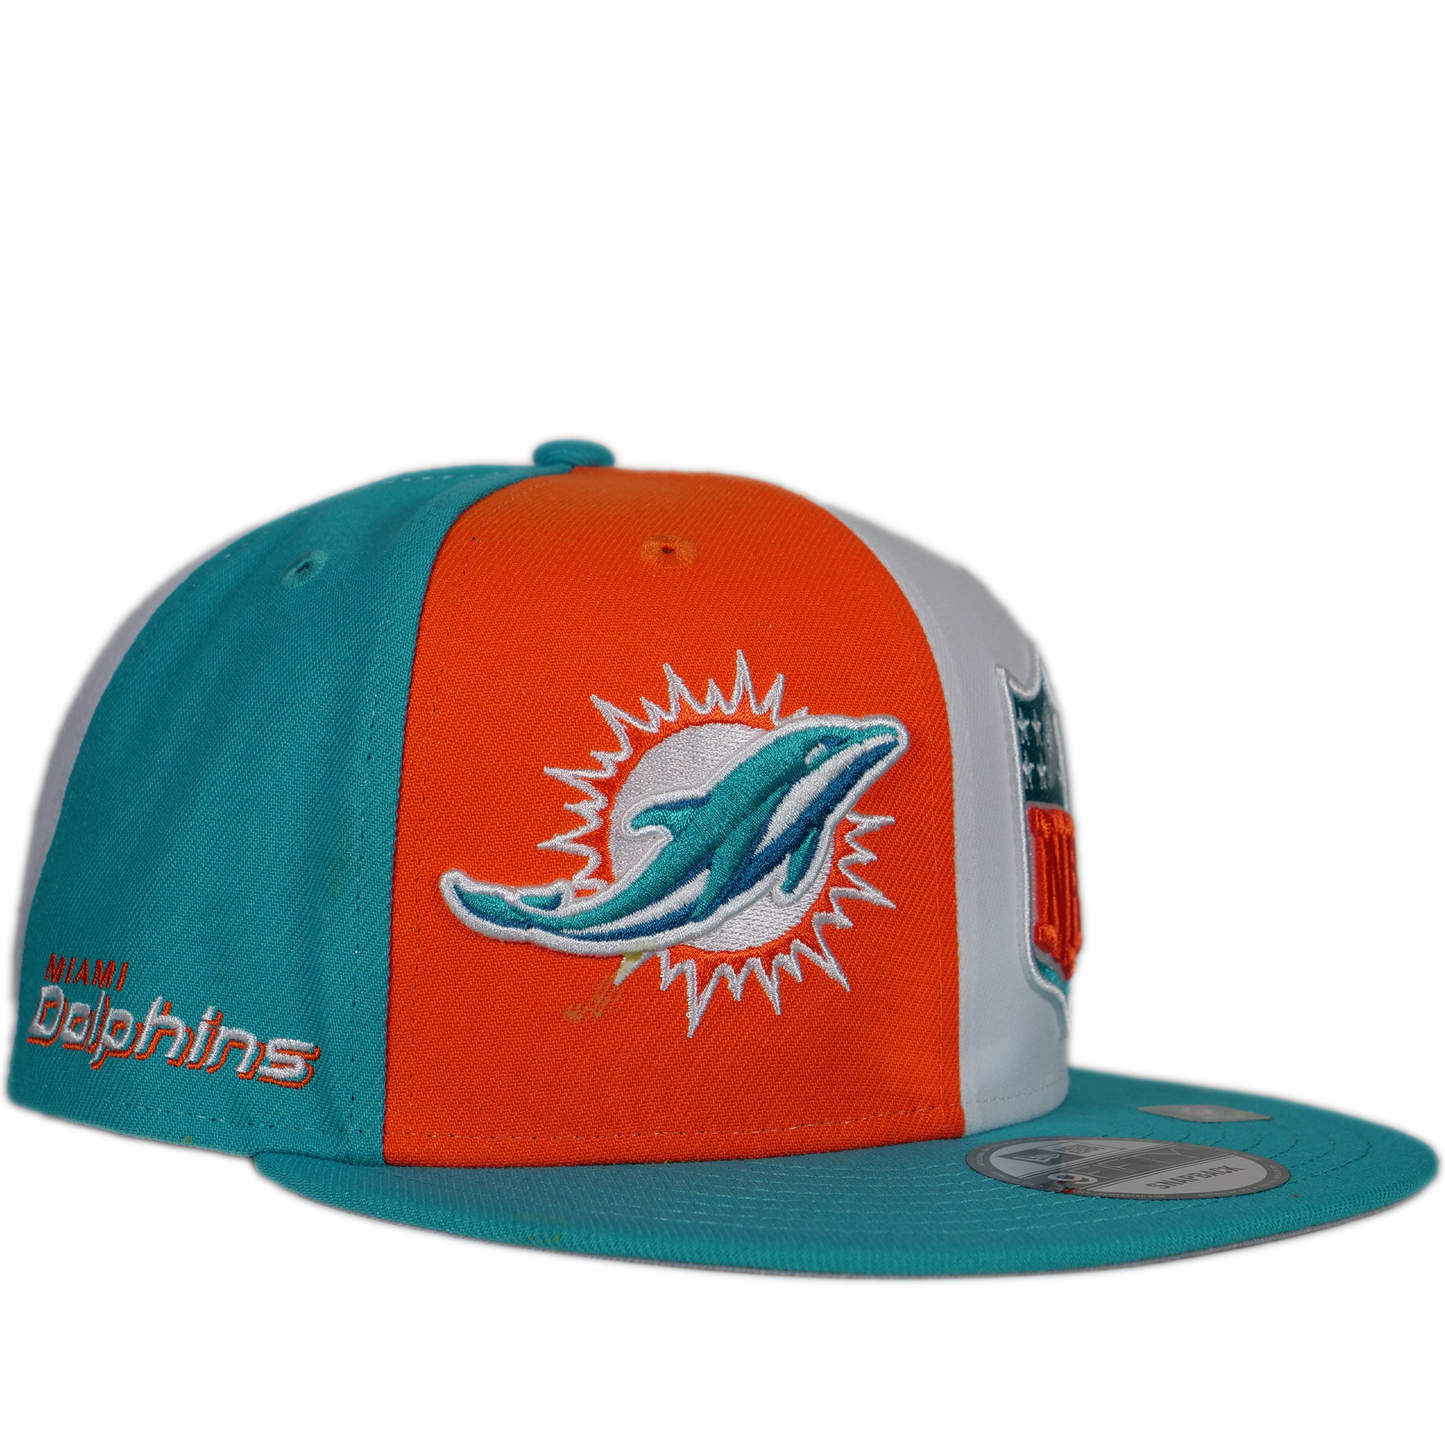 New Era NFL Miami Dolphins 9FIFTY Snapback- Multicolor